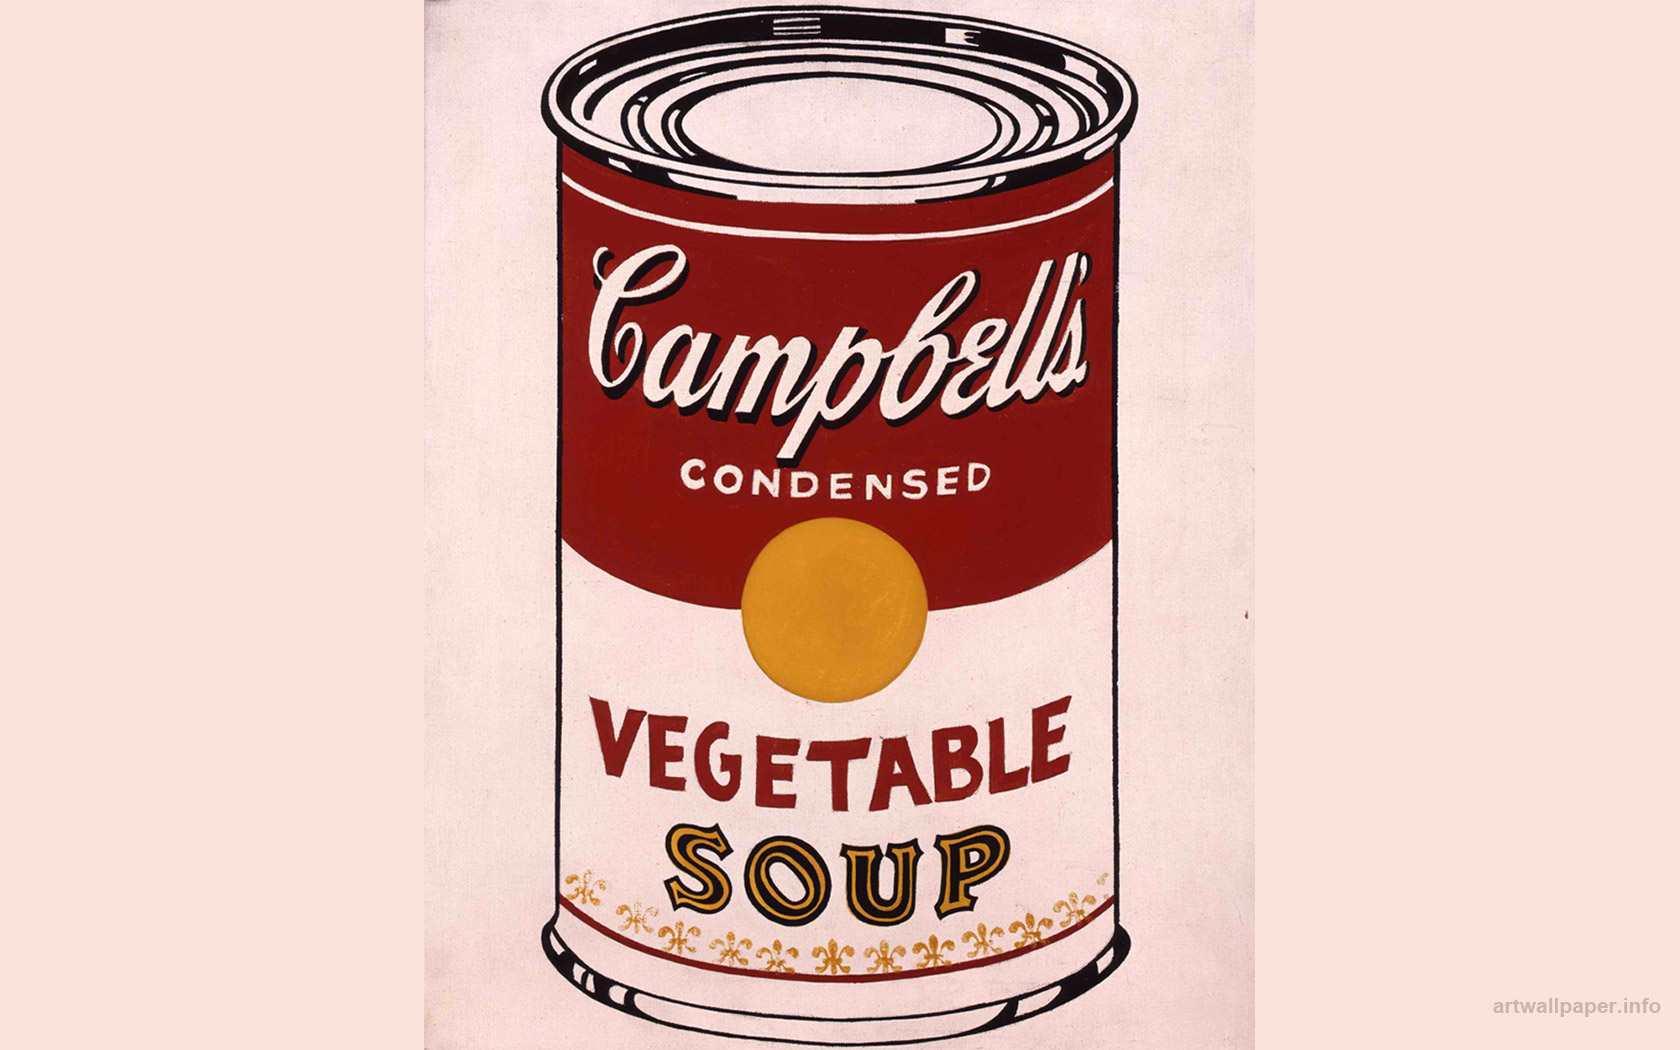 Andy Warhol x Flavor Paper Serves Up Vibrant Pop Art Wallpapers Slide Show   Architectural Digest